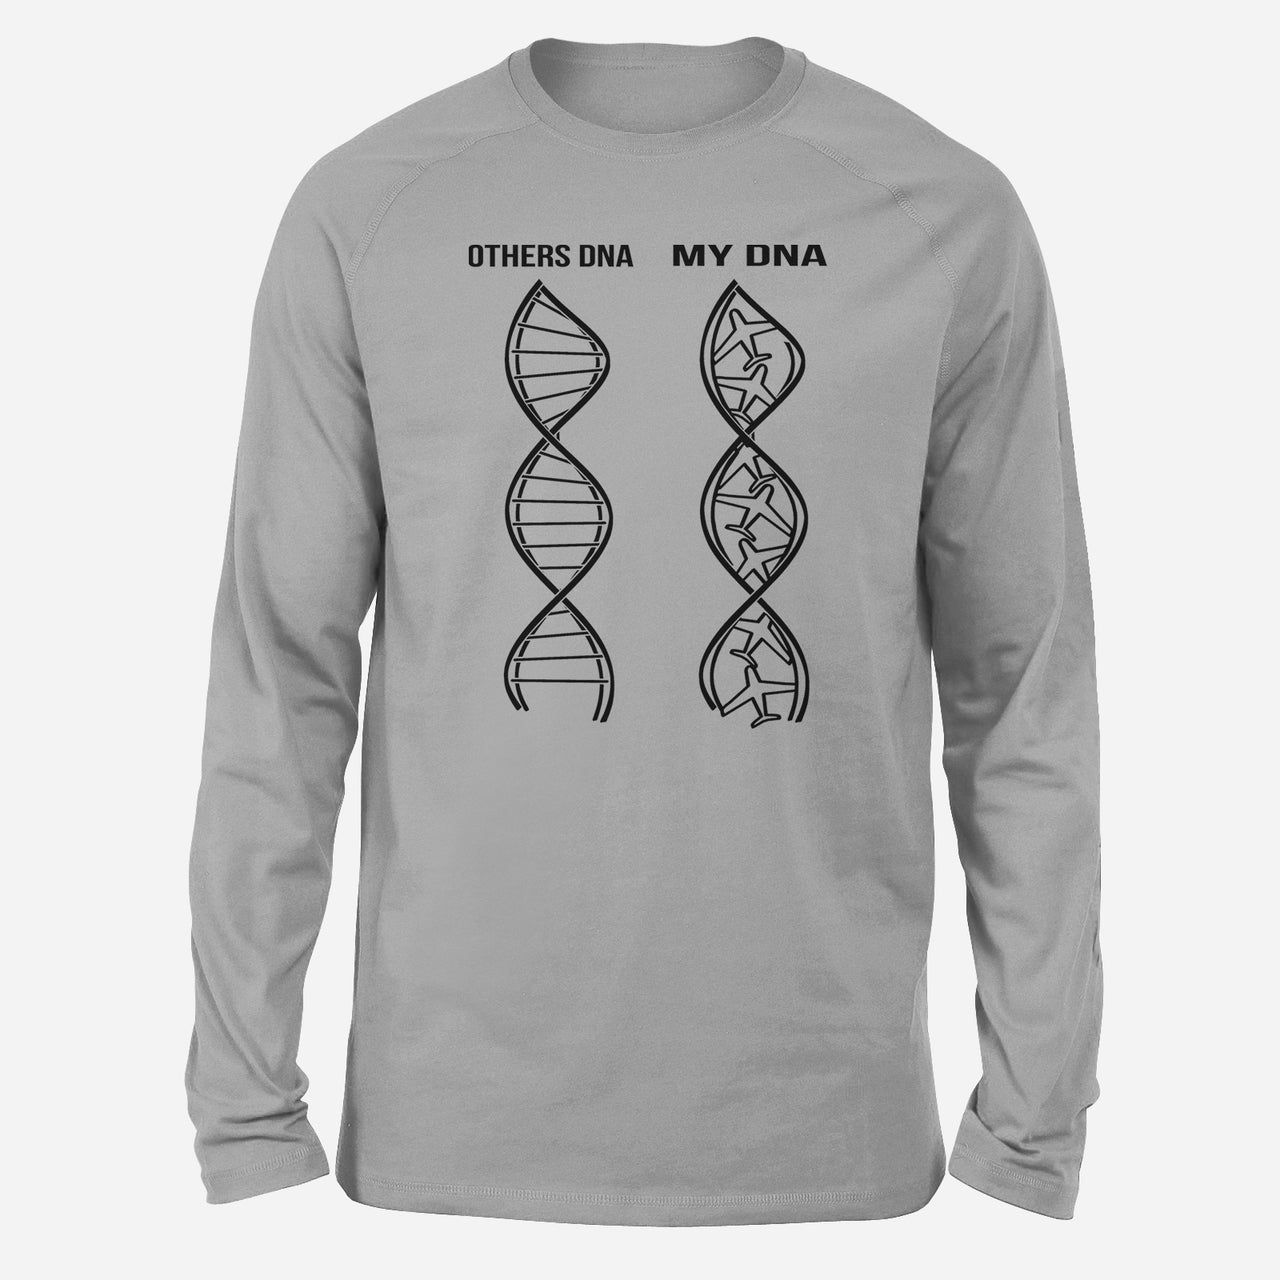 Aviation DNA Designed Long-Sleeve T-Shirts